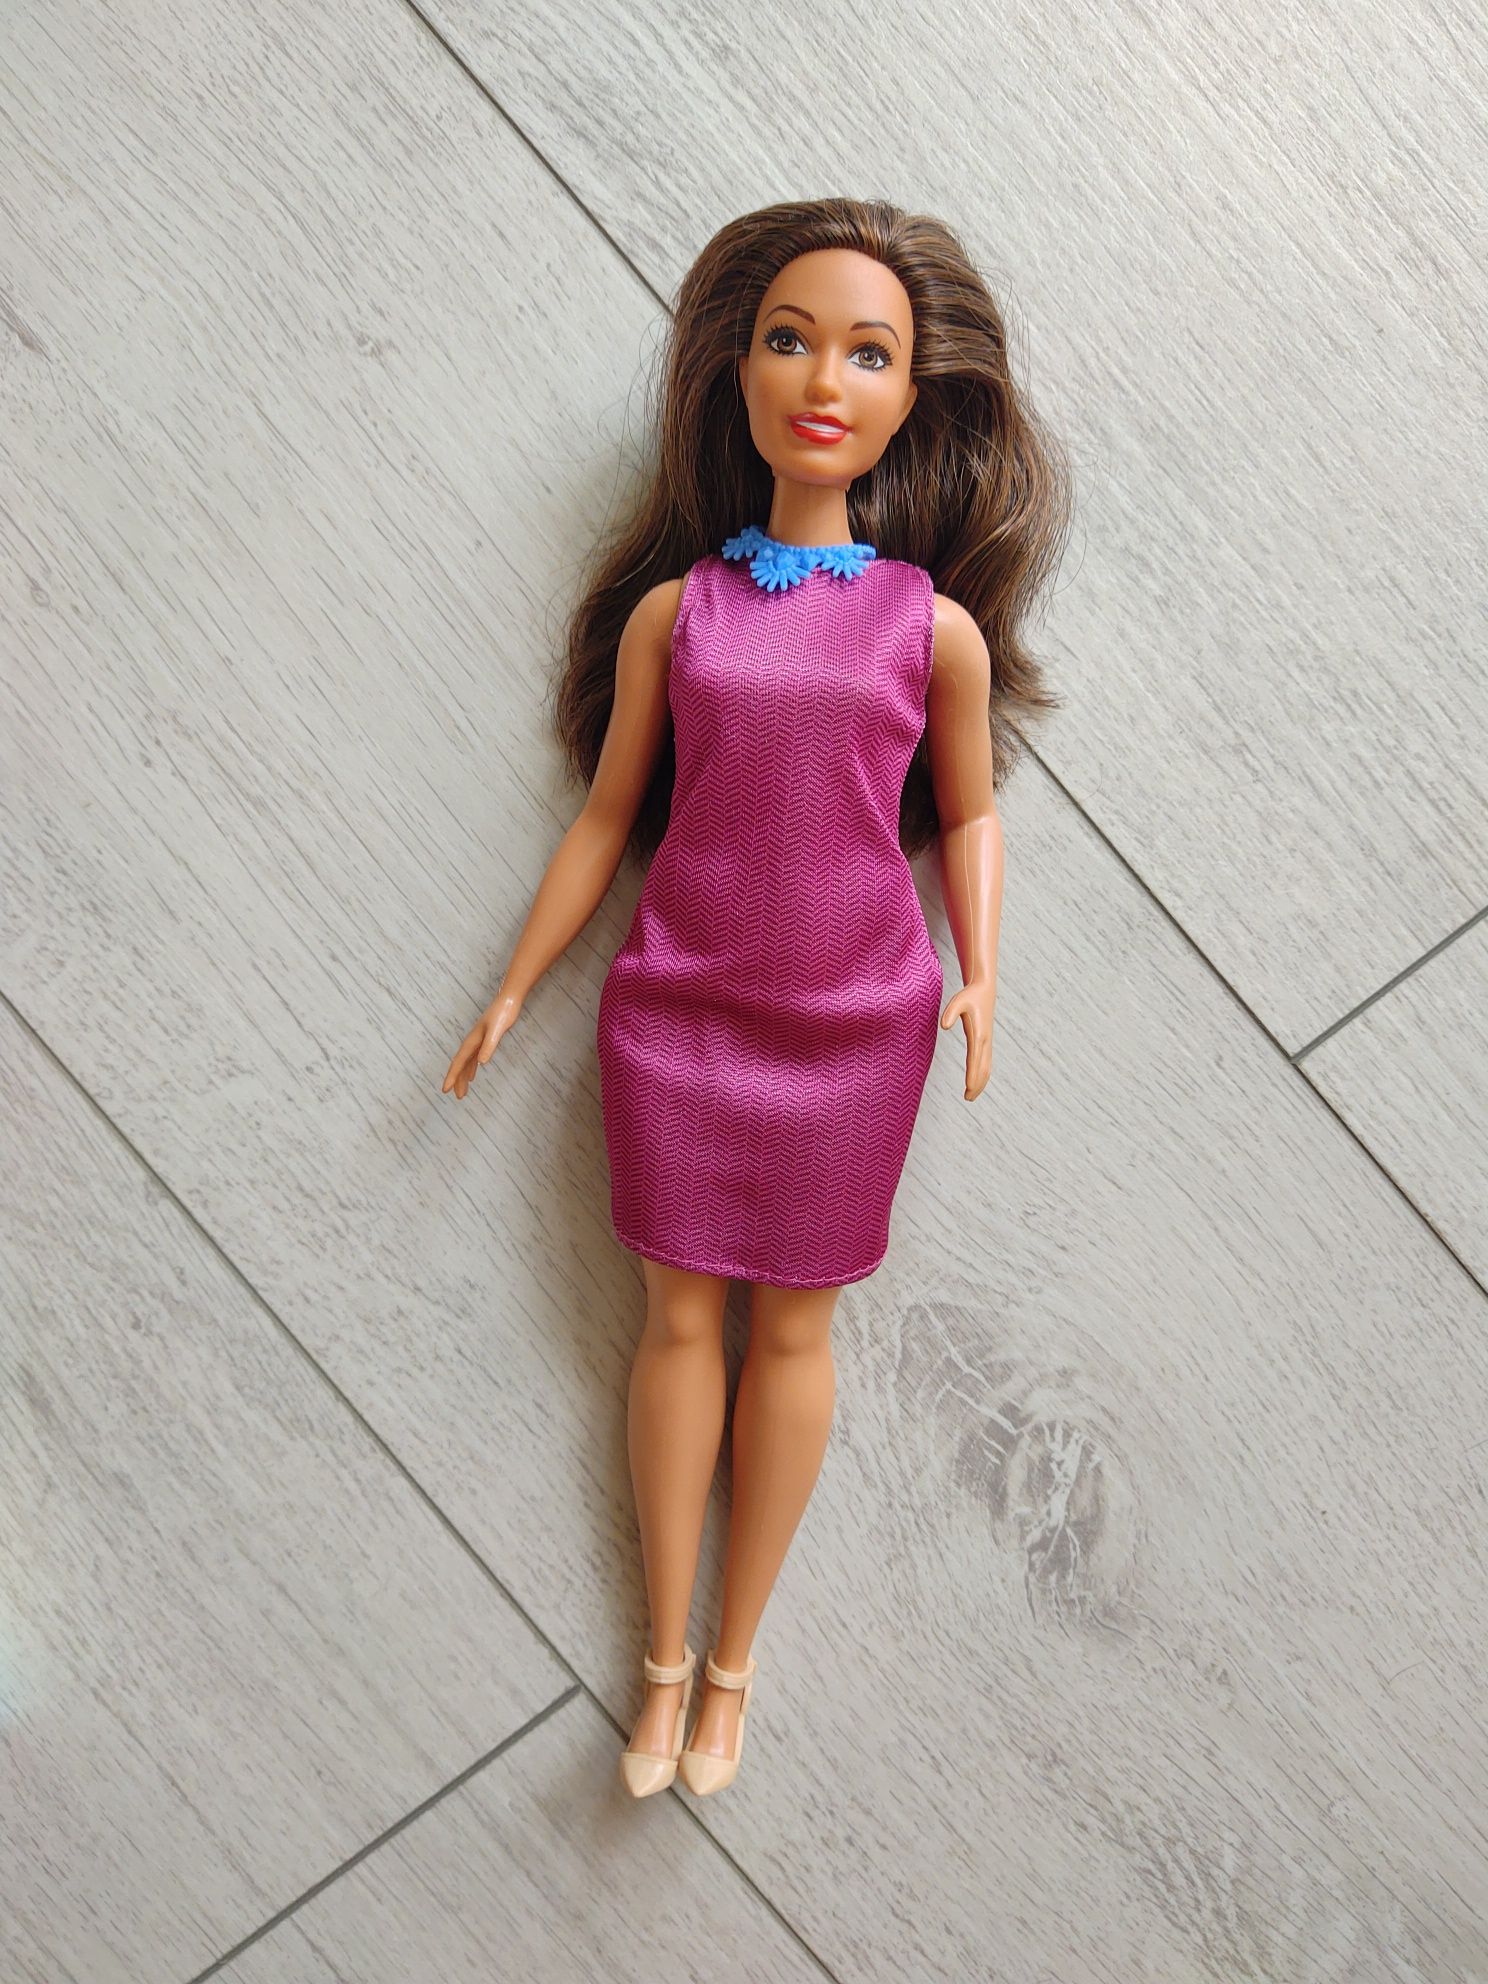 Barbie dziennikarka lalka zawody naturalna